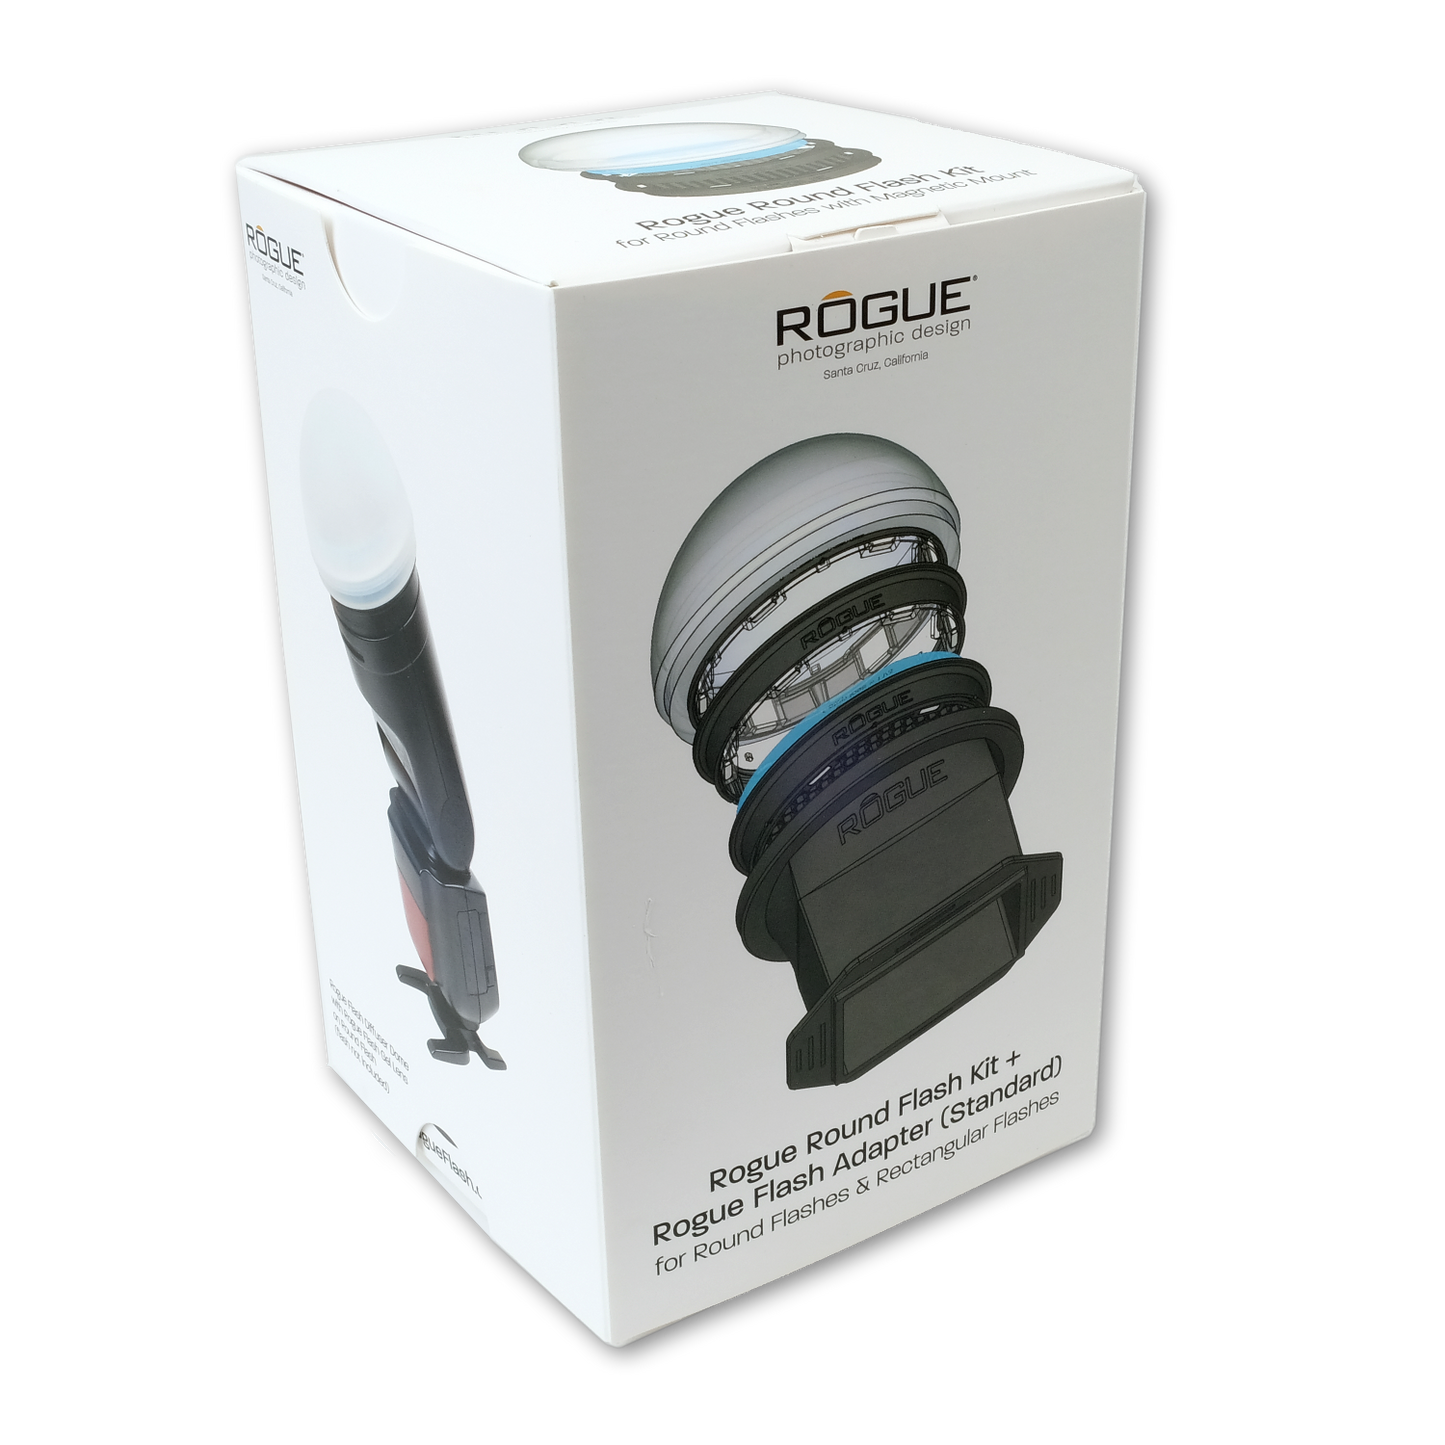 Rogue Round Flash Kit + Rogue Flash Adapter Standard v2